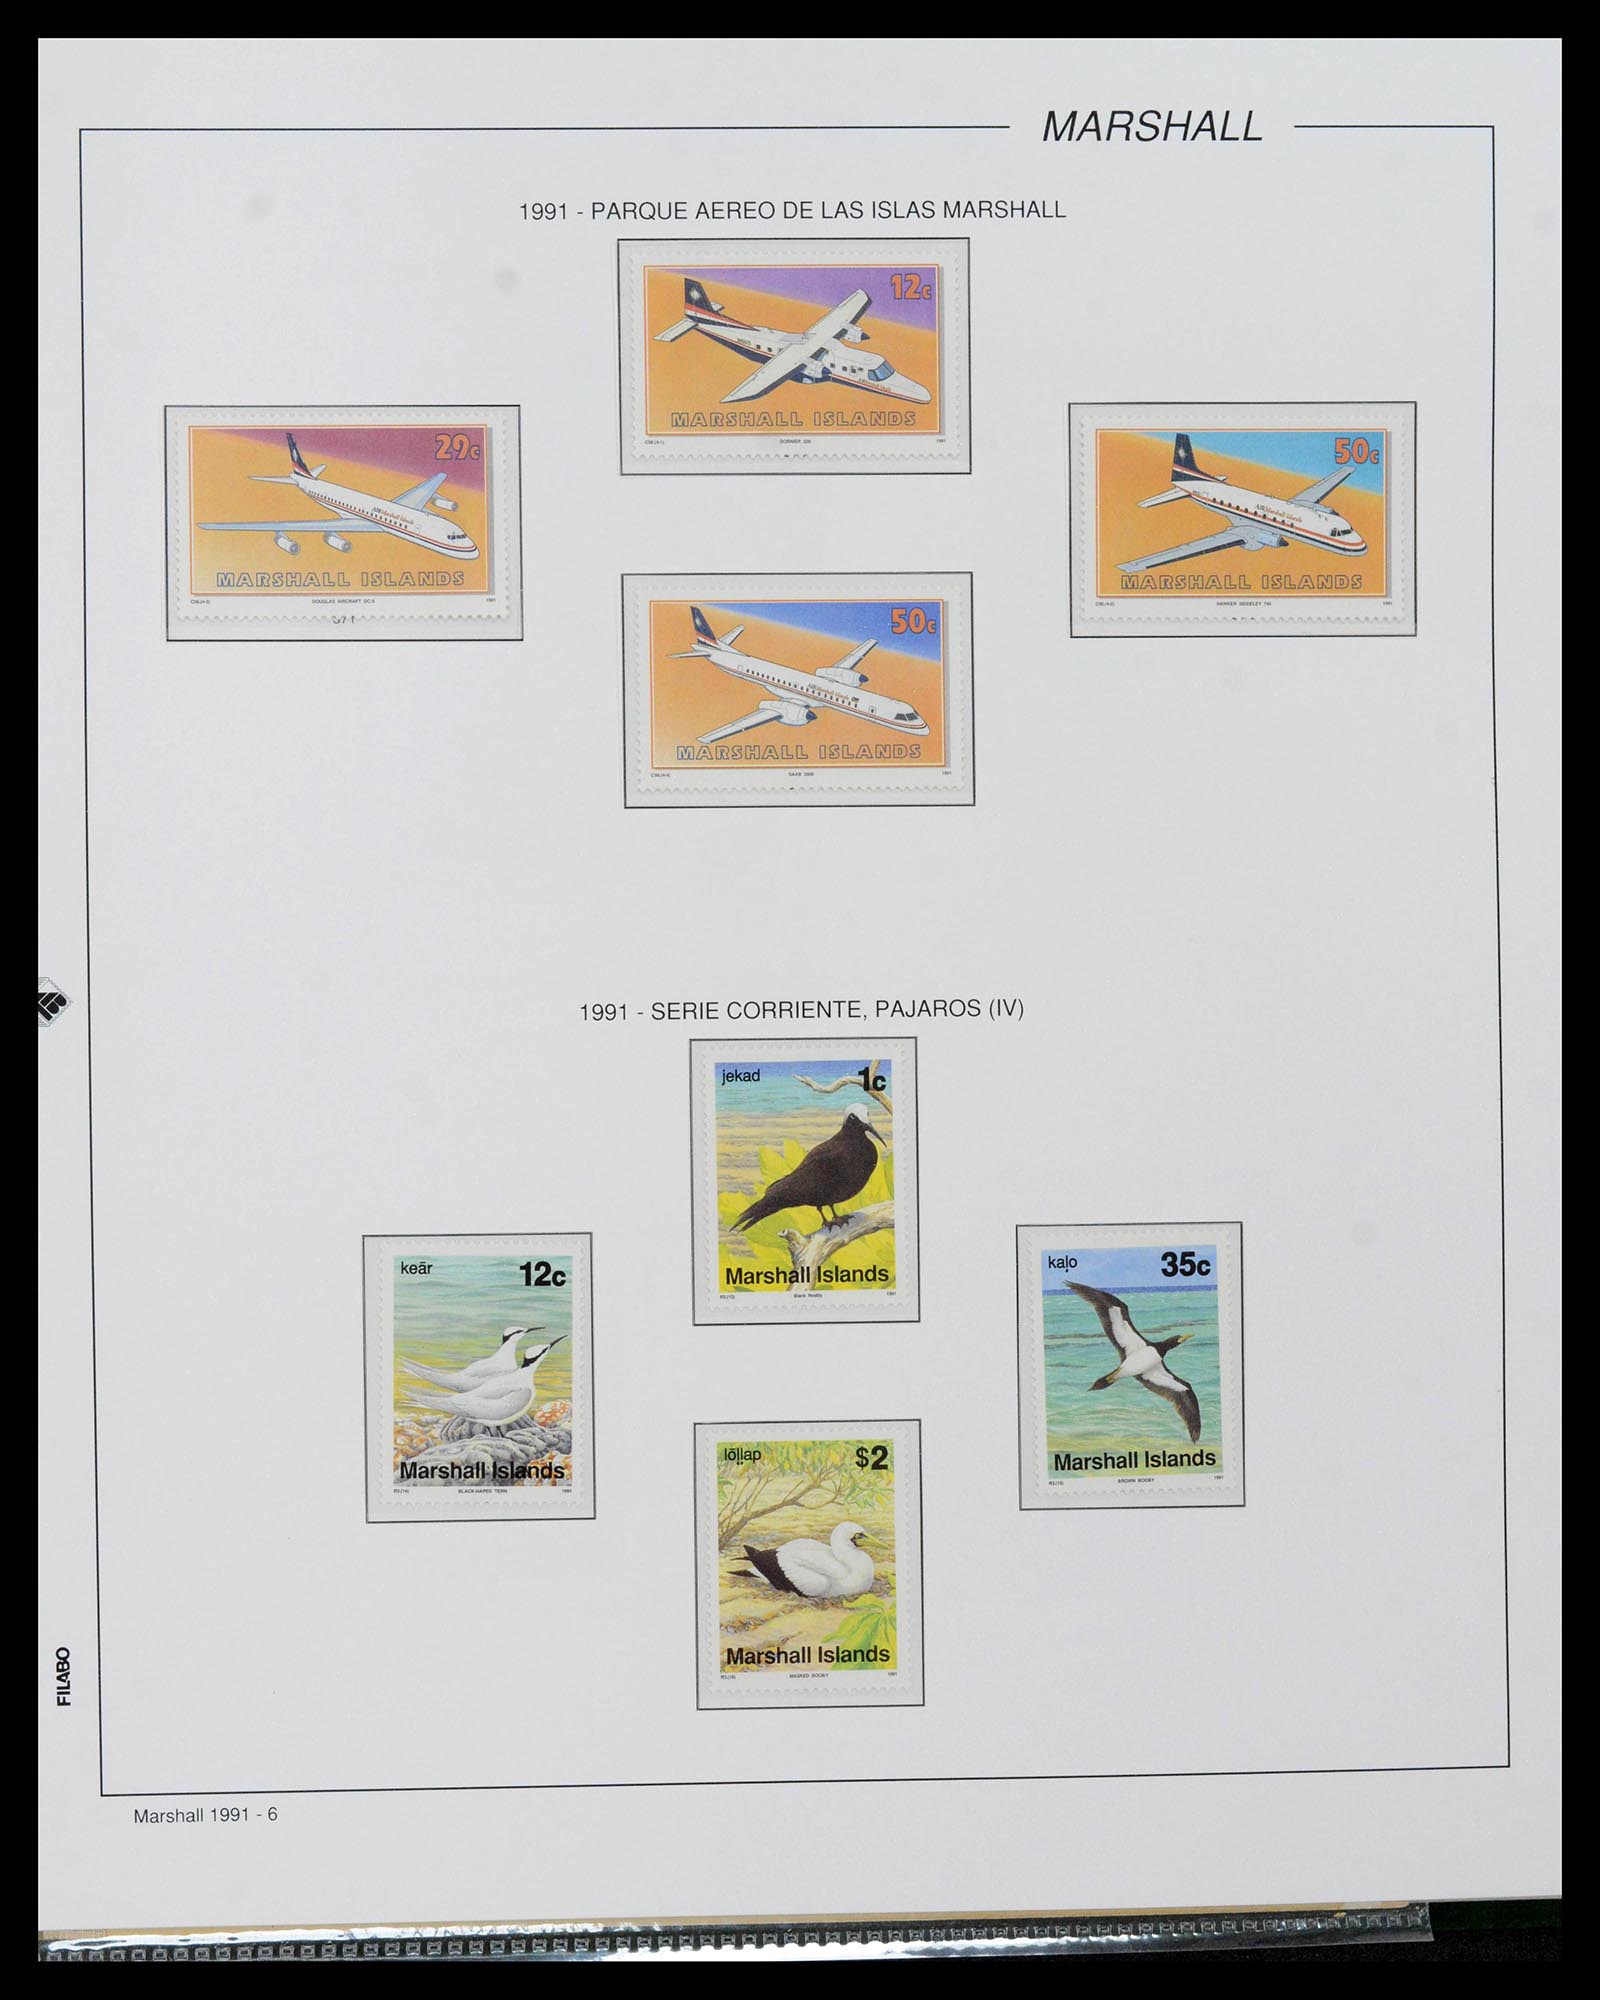 39222 0156 - Stamp collection 39222 Palau, Micronesia and Marshall islands 1980-1995.